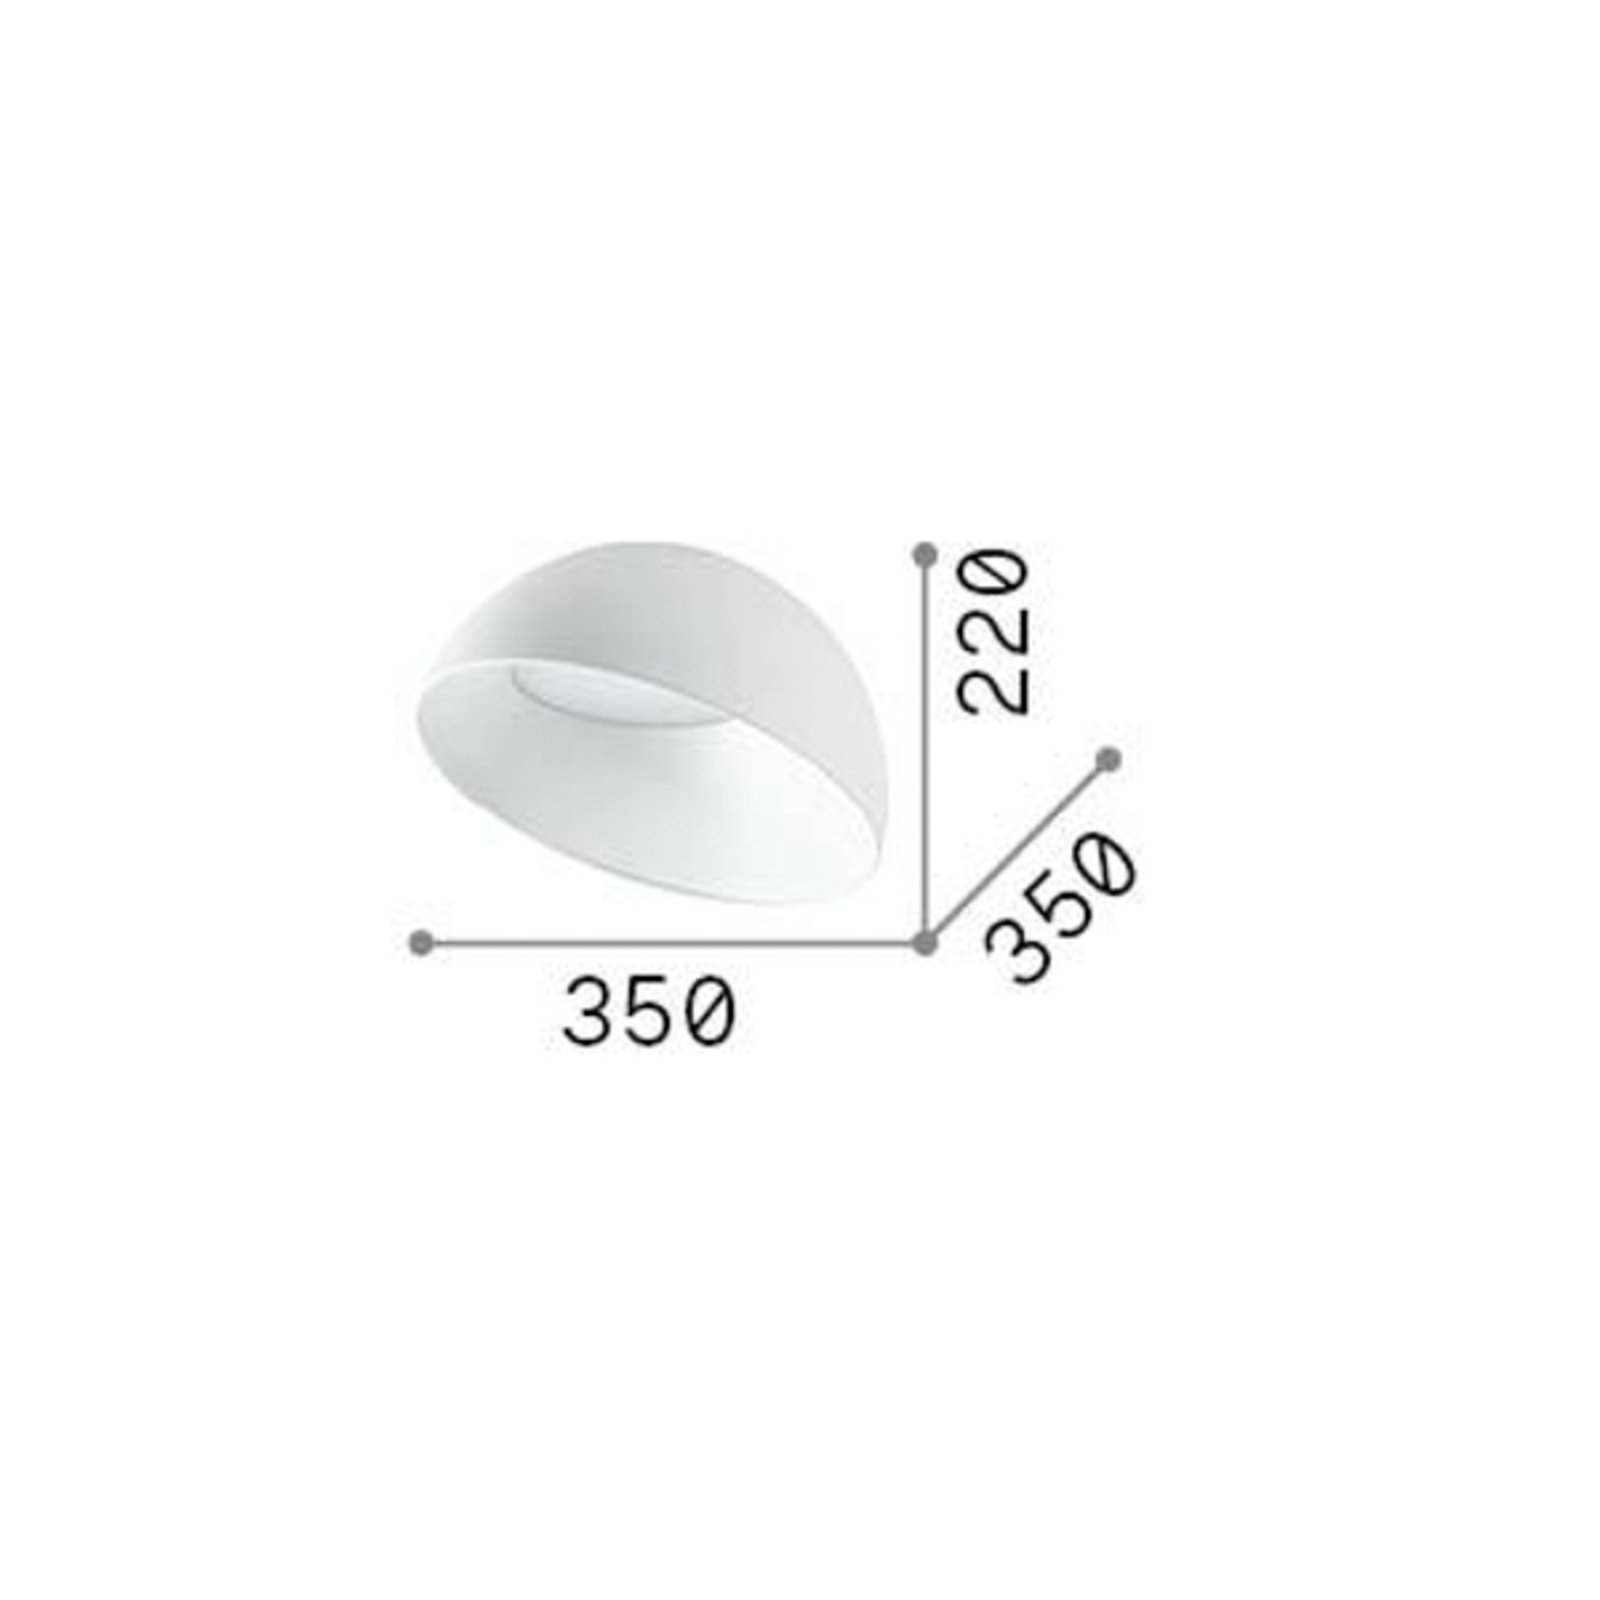 Ideal Lux taklampe Corolla-2, hvit, metall, Ø 35 cm